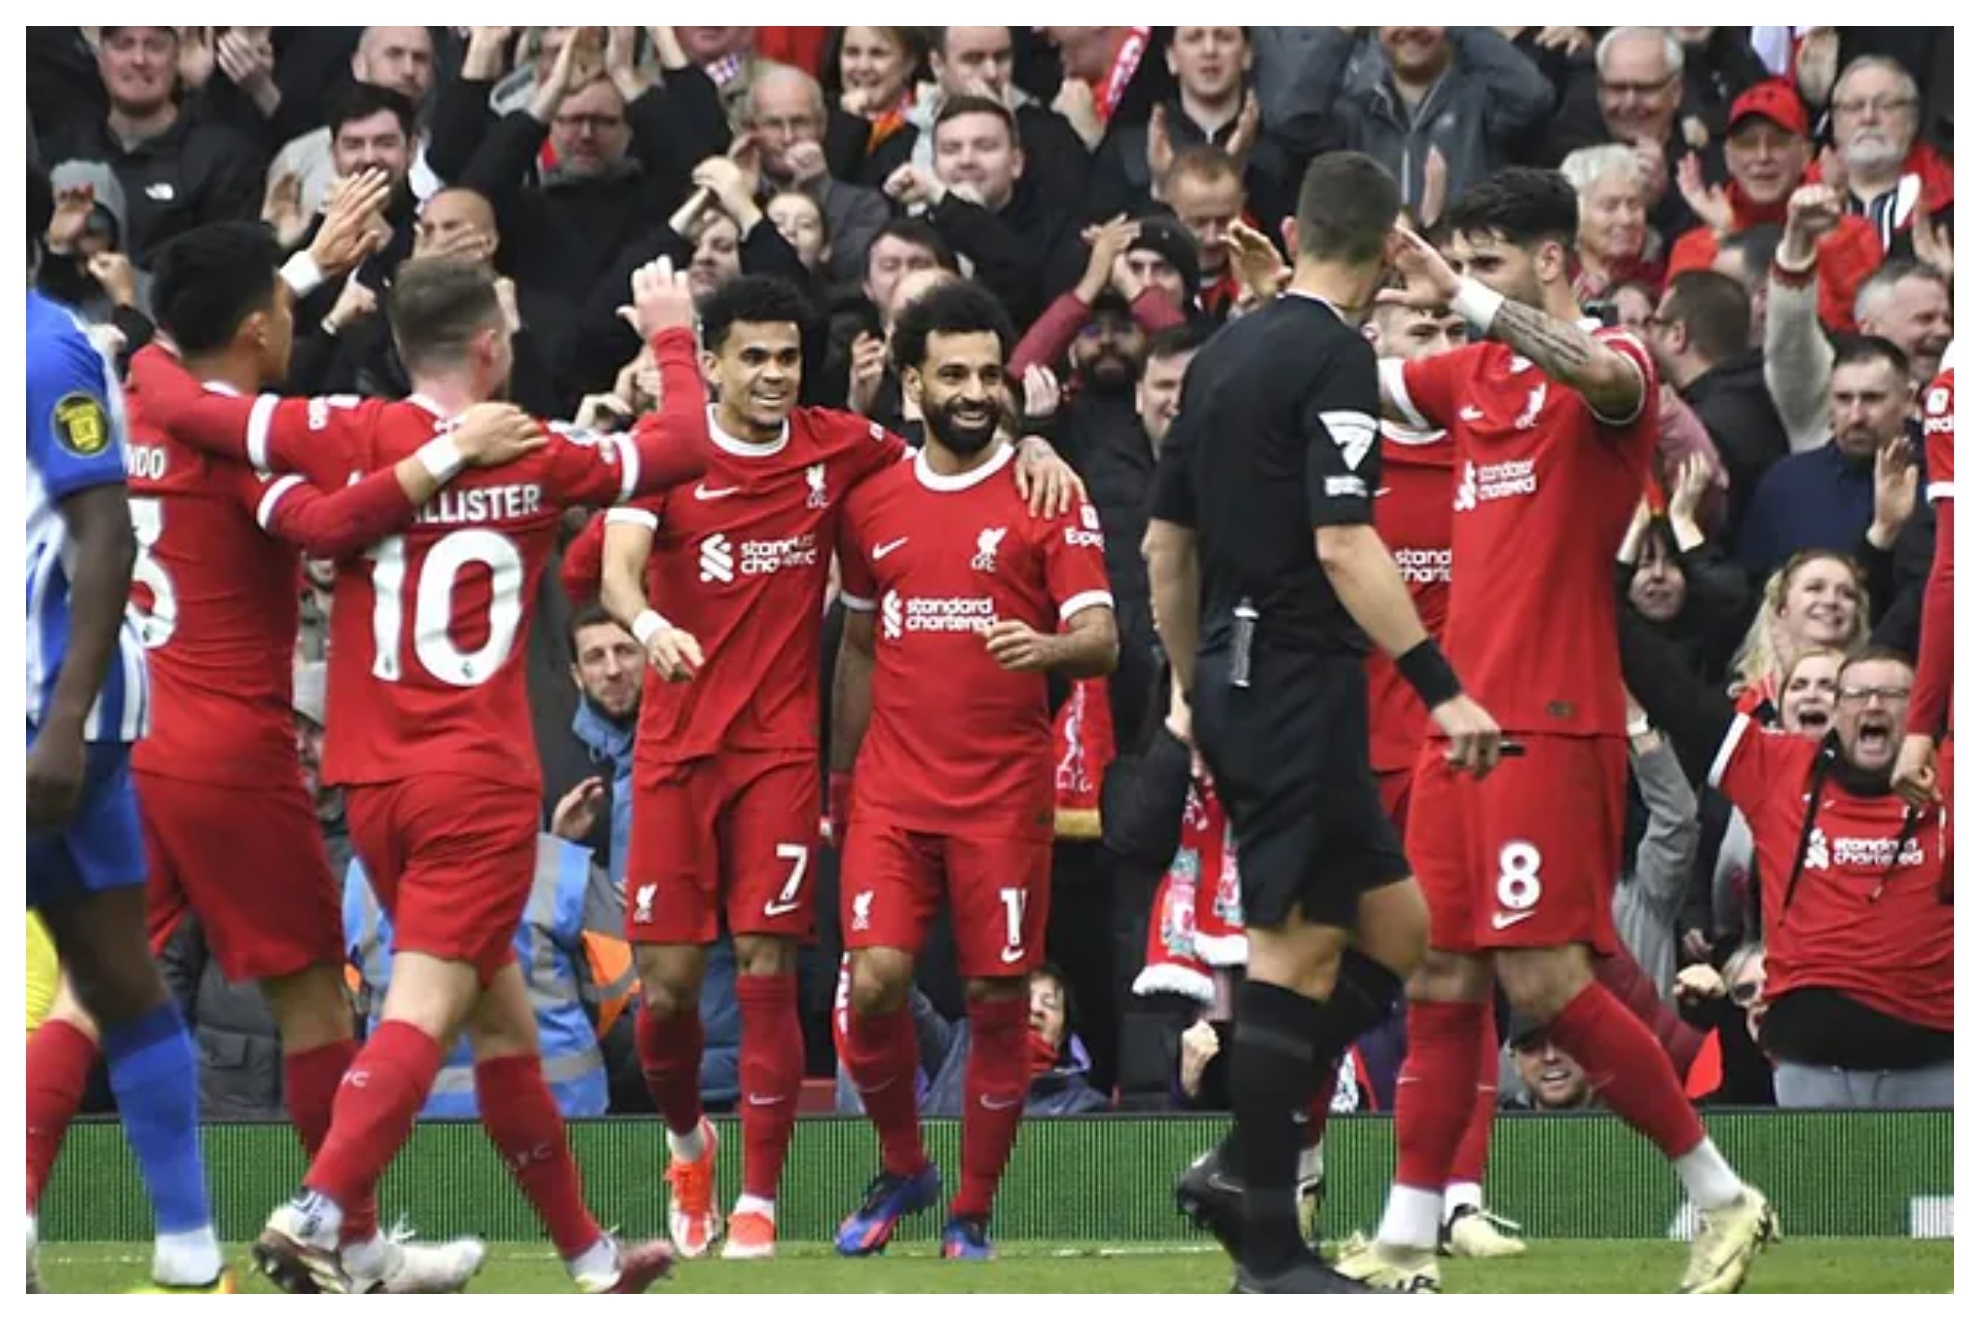 Los jugadores del Liverpool celebran el gol de Salah